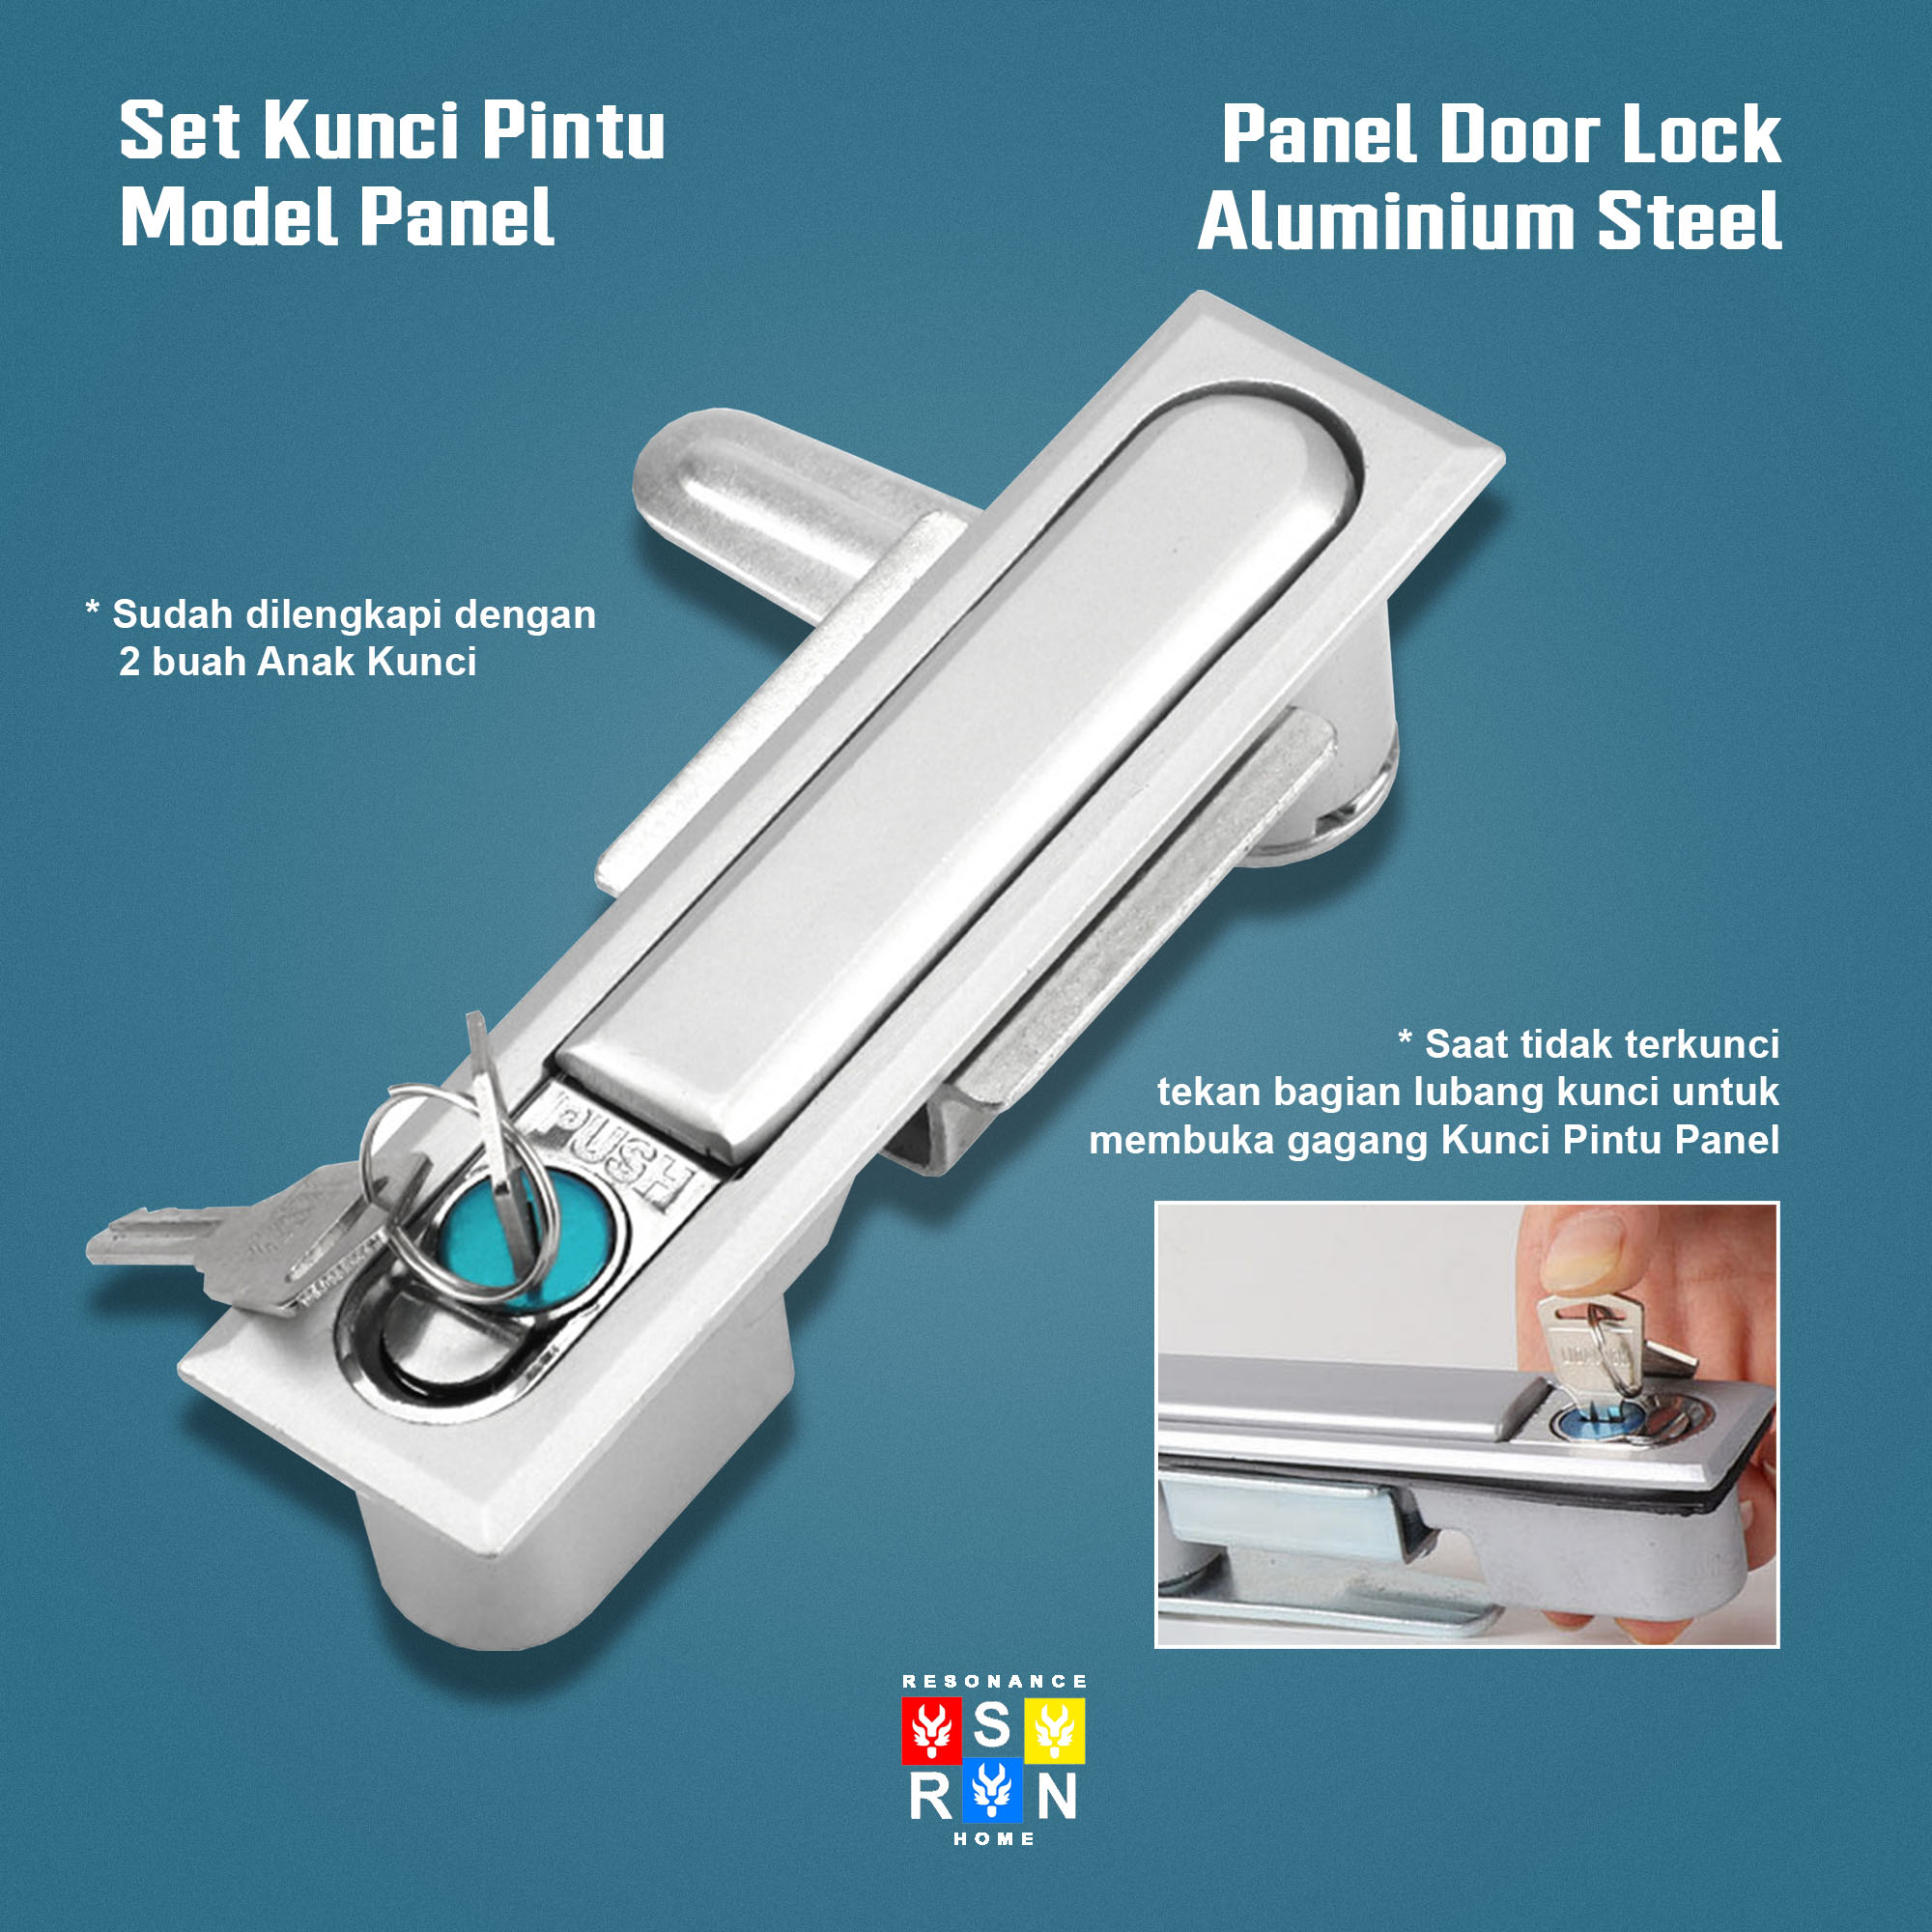 Kunci Pintu Panel / Secure Door Lock Set RESONANCE HOME